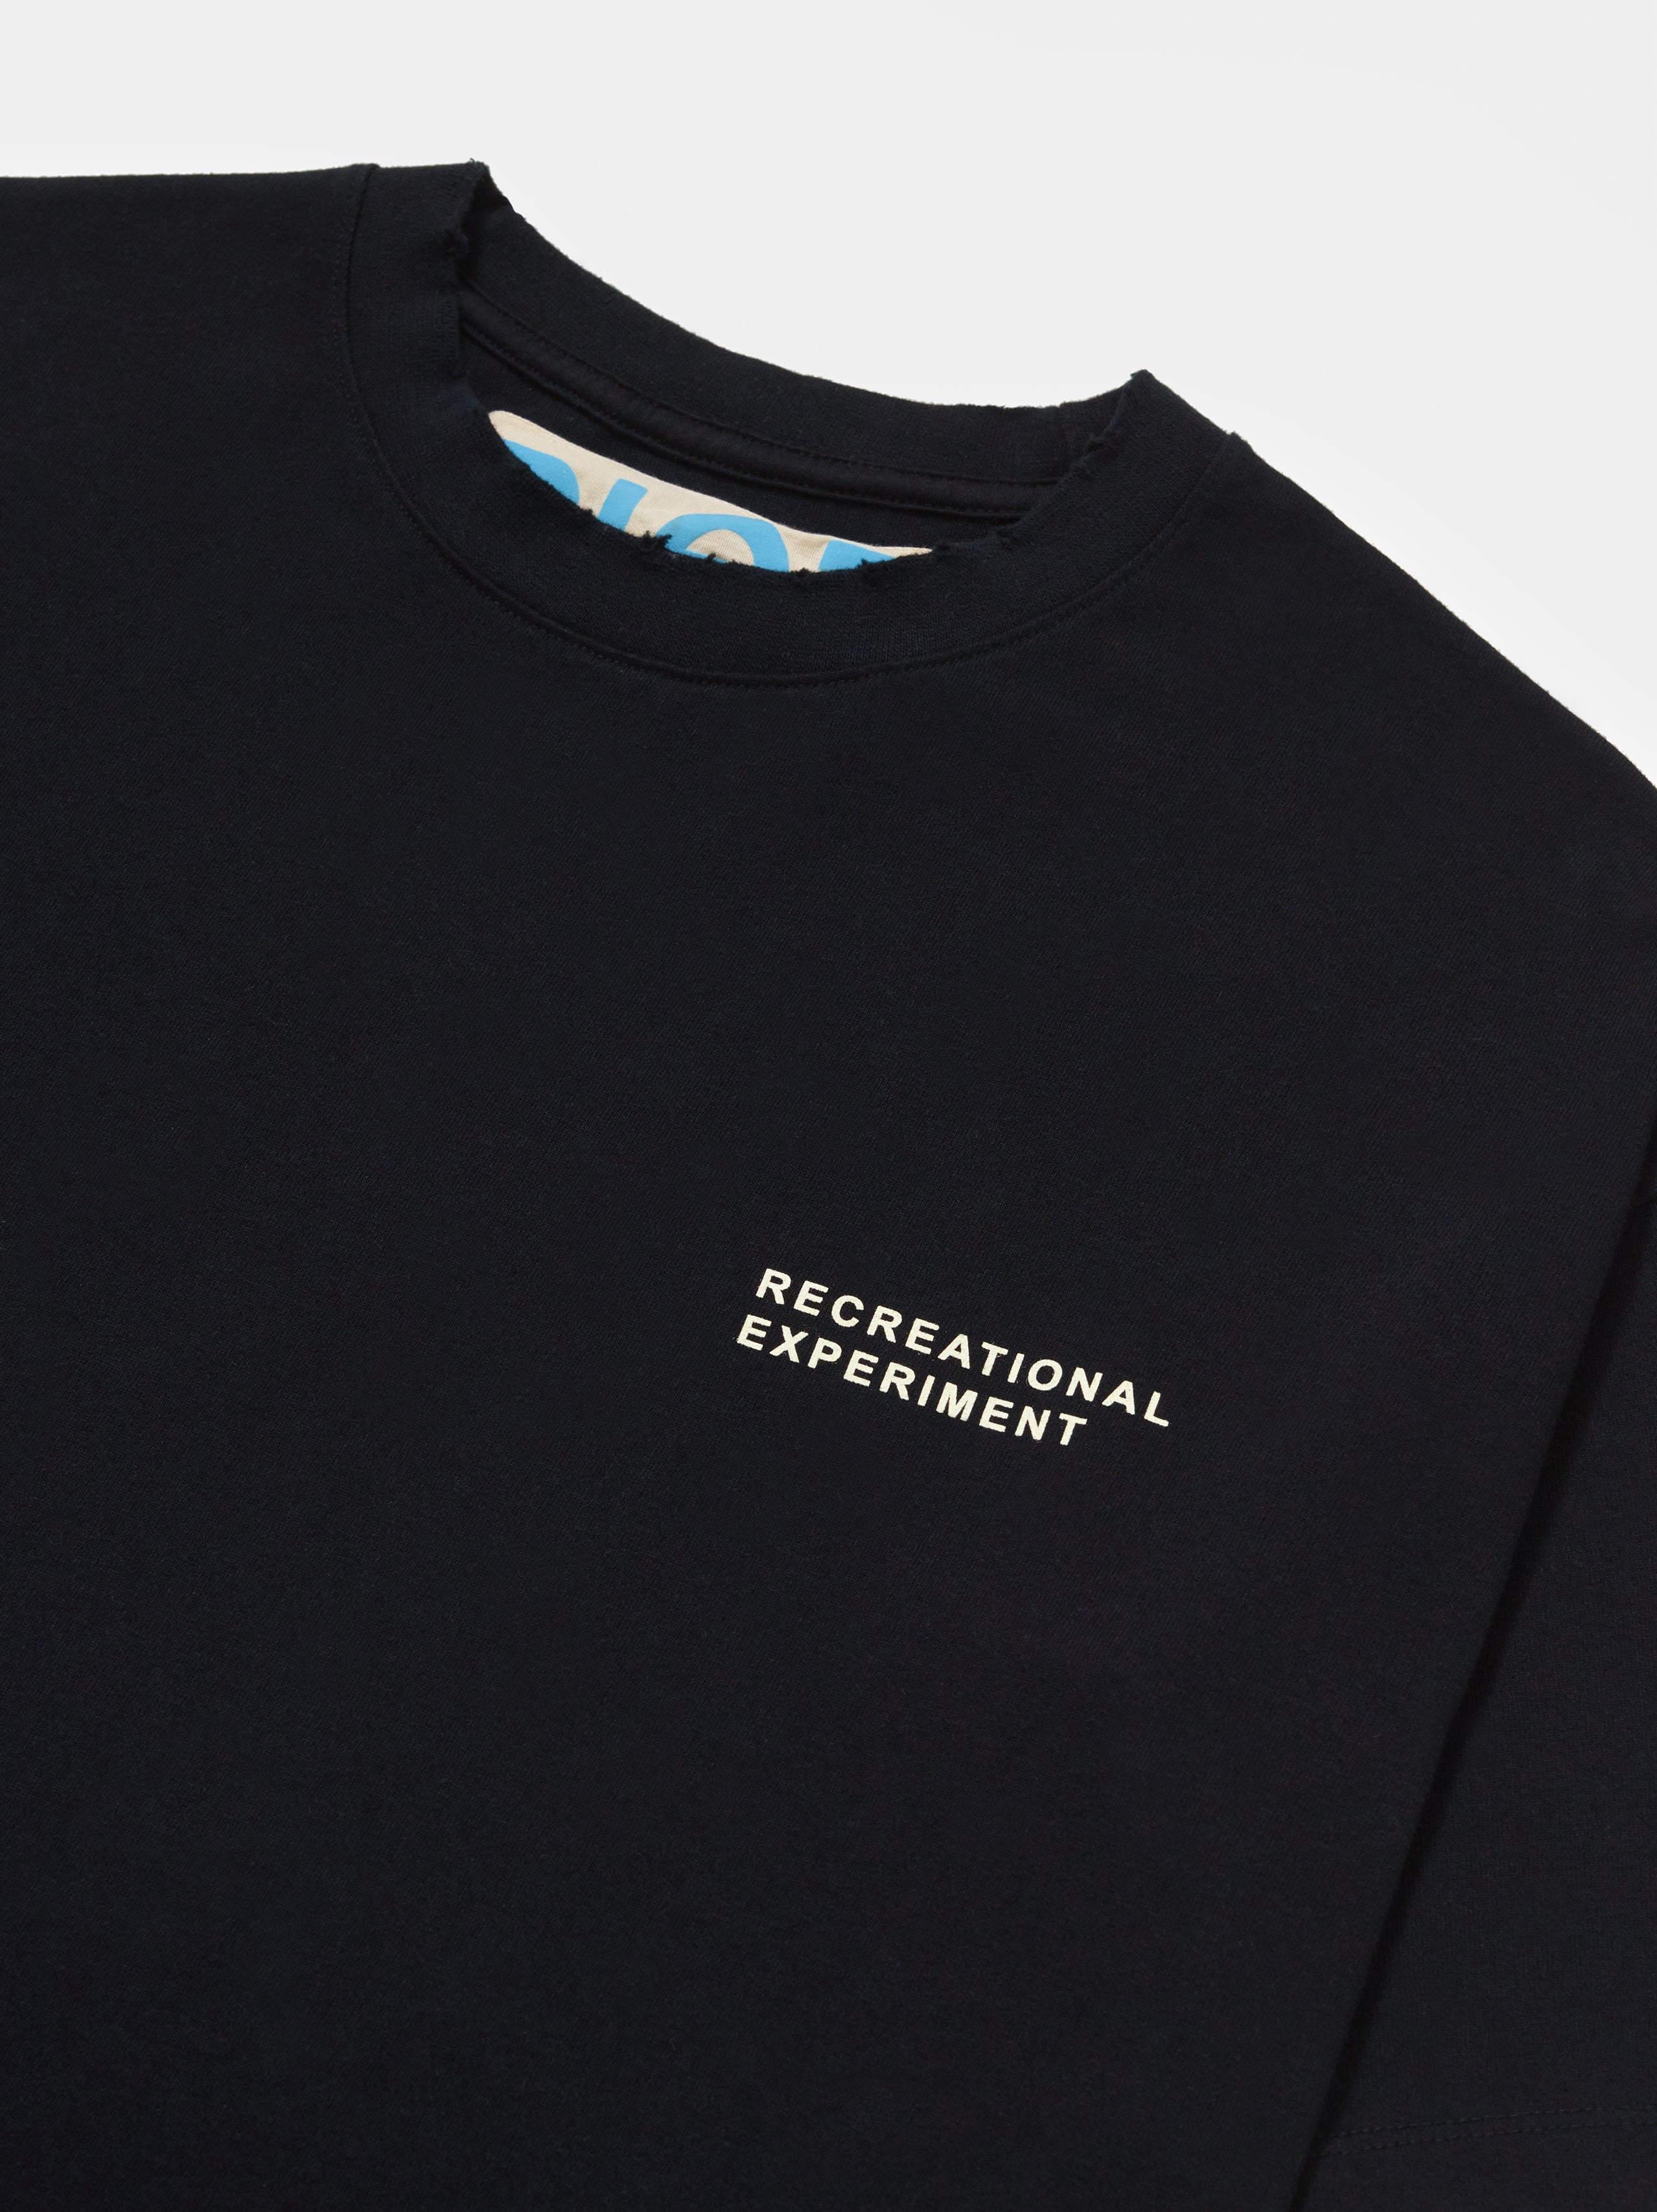 Recreational Experiment Gem T-Shirt - Black